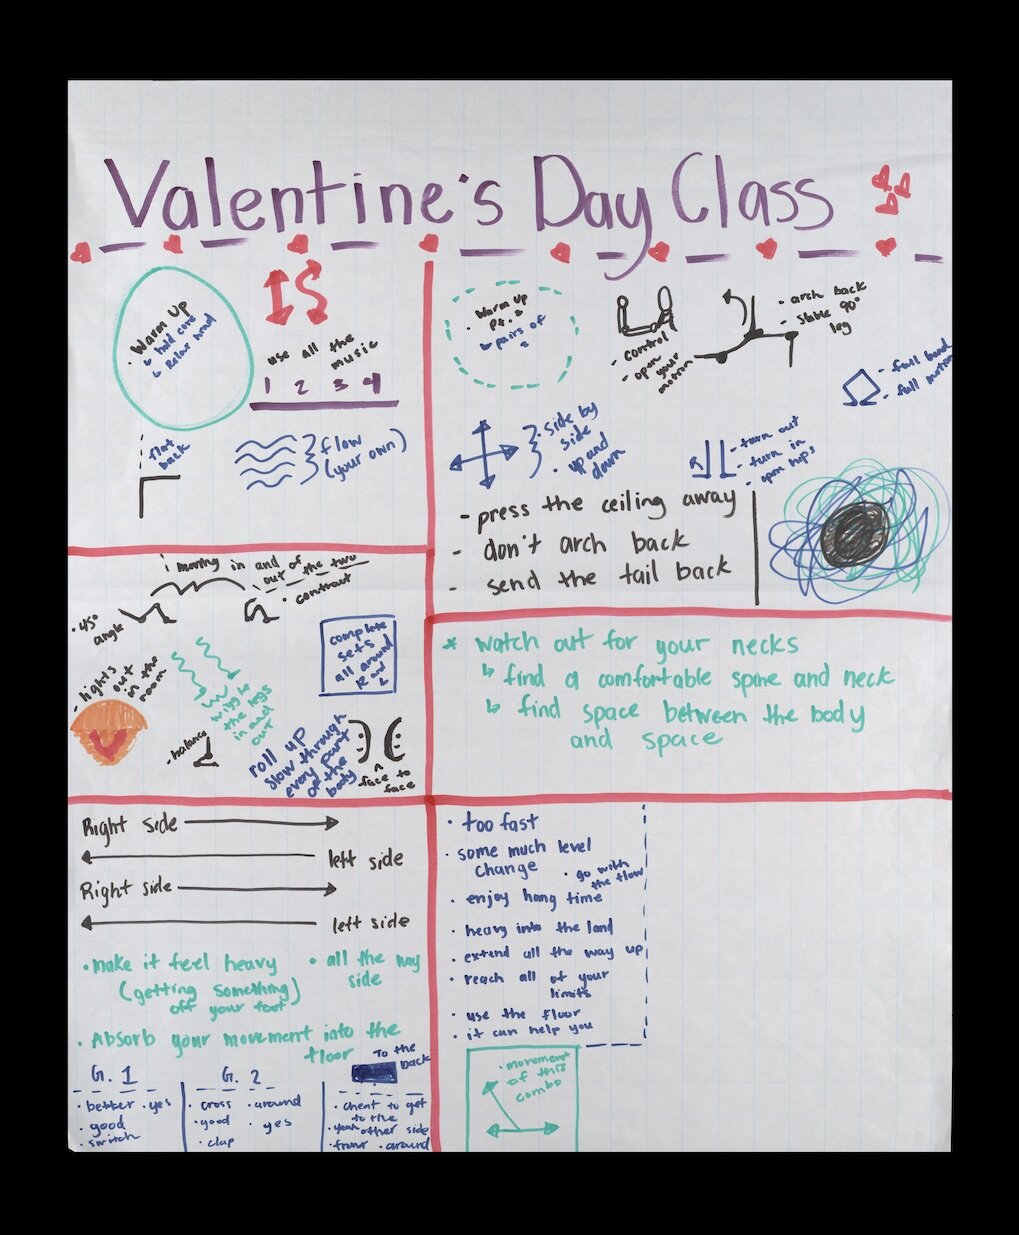 Valentines Day Score.jpg